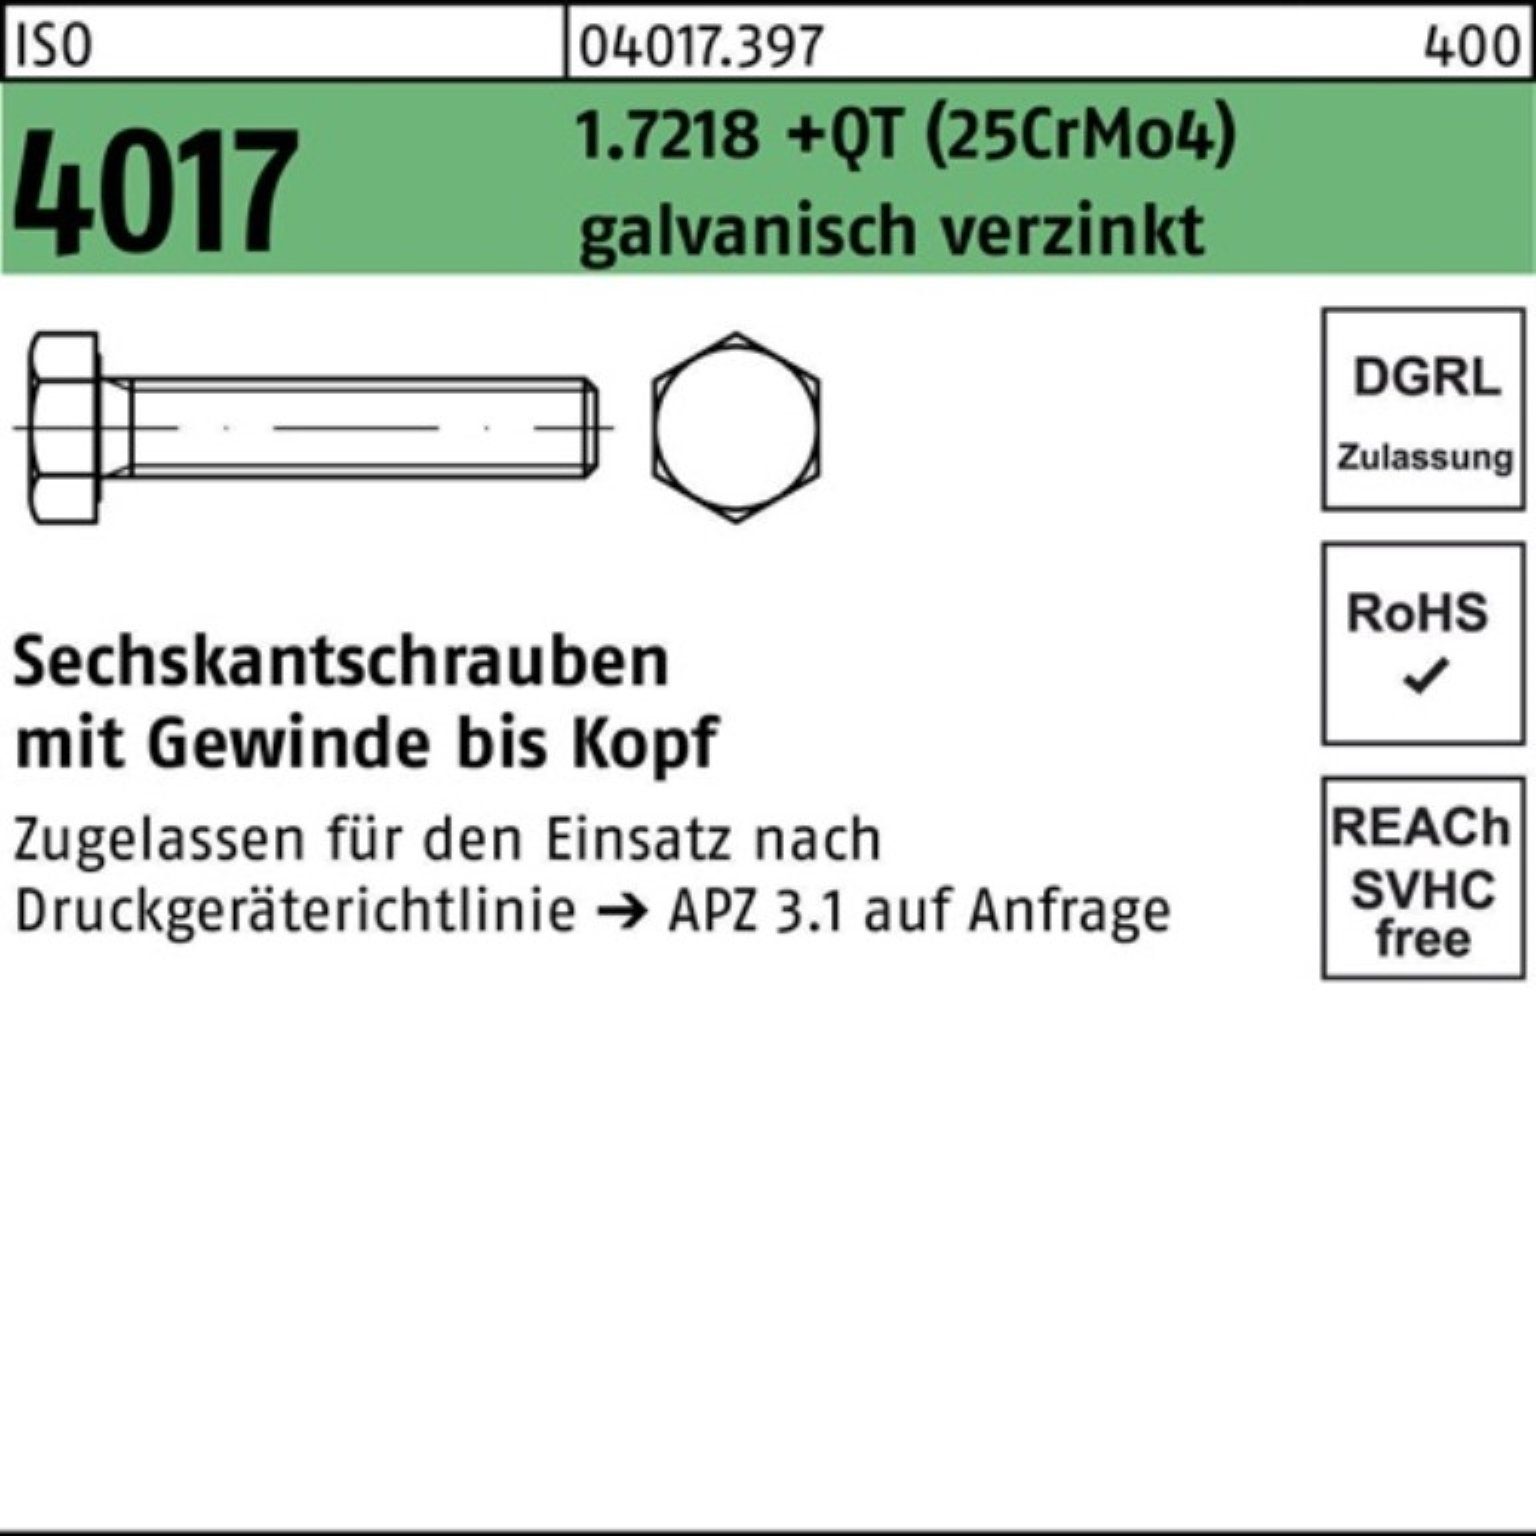 ISO M33x120 Bufab (25CrMo4) 4017 Sechskantschraube Pack Sechskantschraube VG 1.7218 +QT 100er